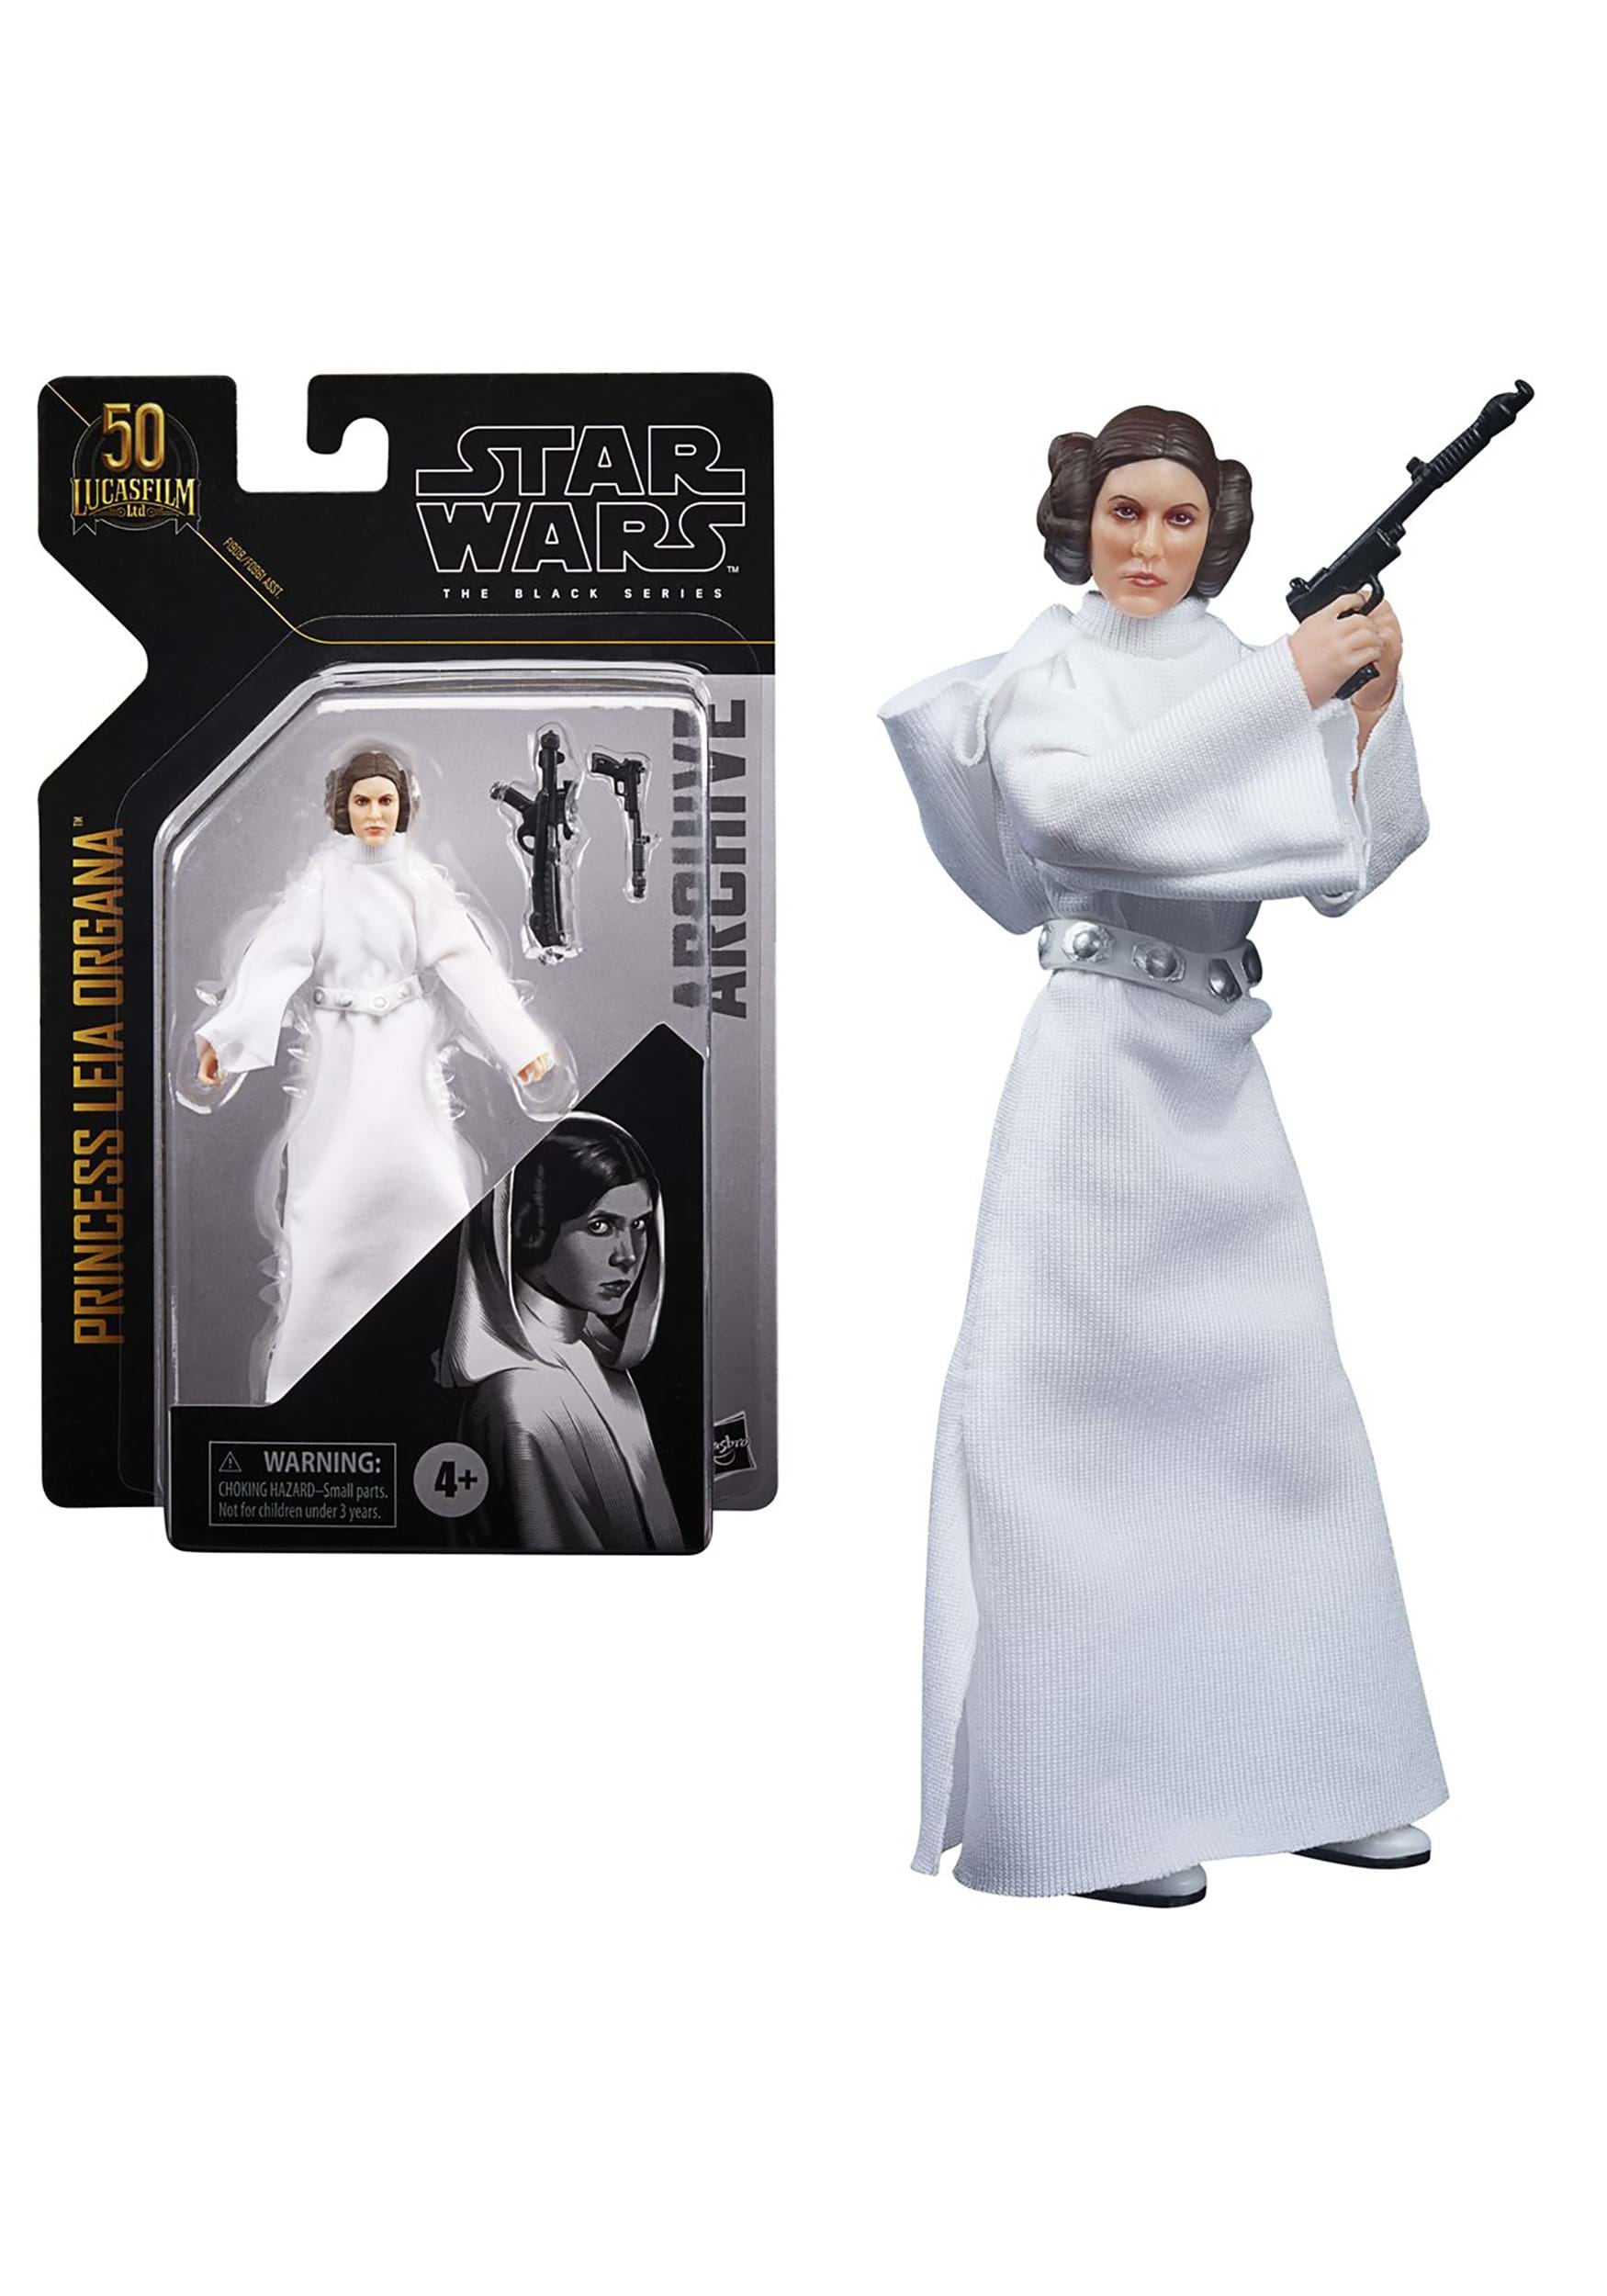 Star Wars Black Series Archive Princess Leia Organa Figure